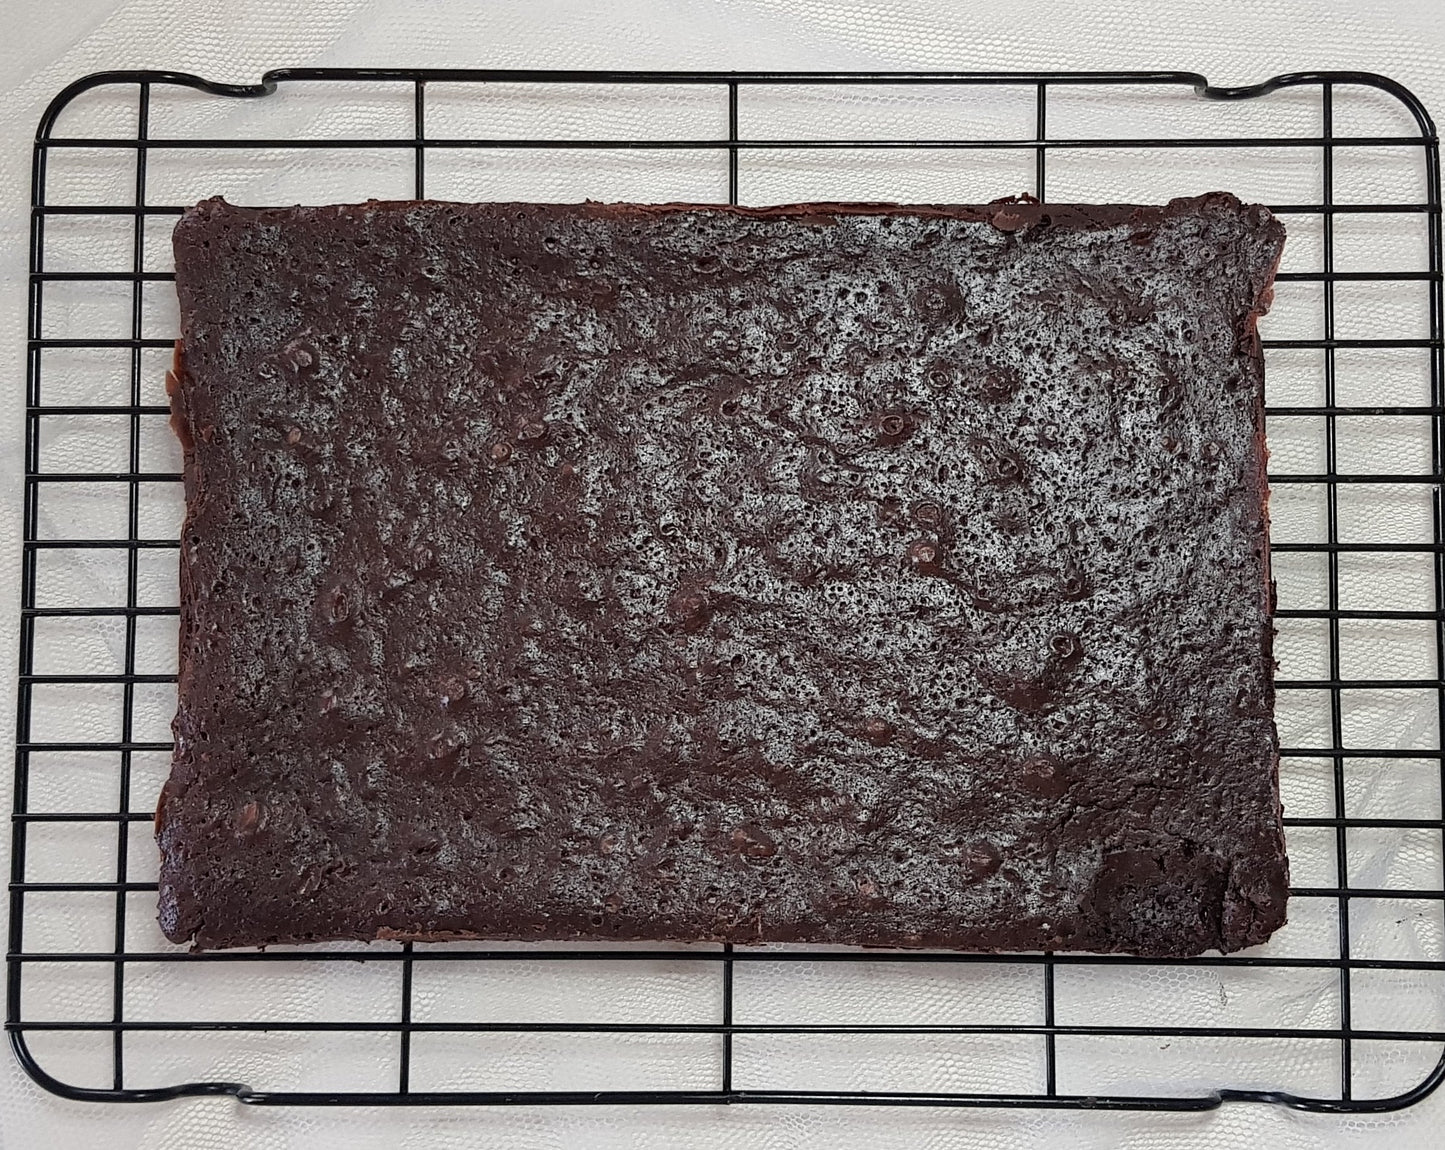 A whole slab of classic fudge brownie